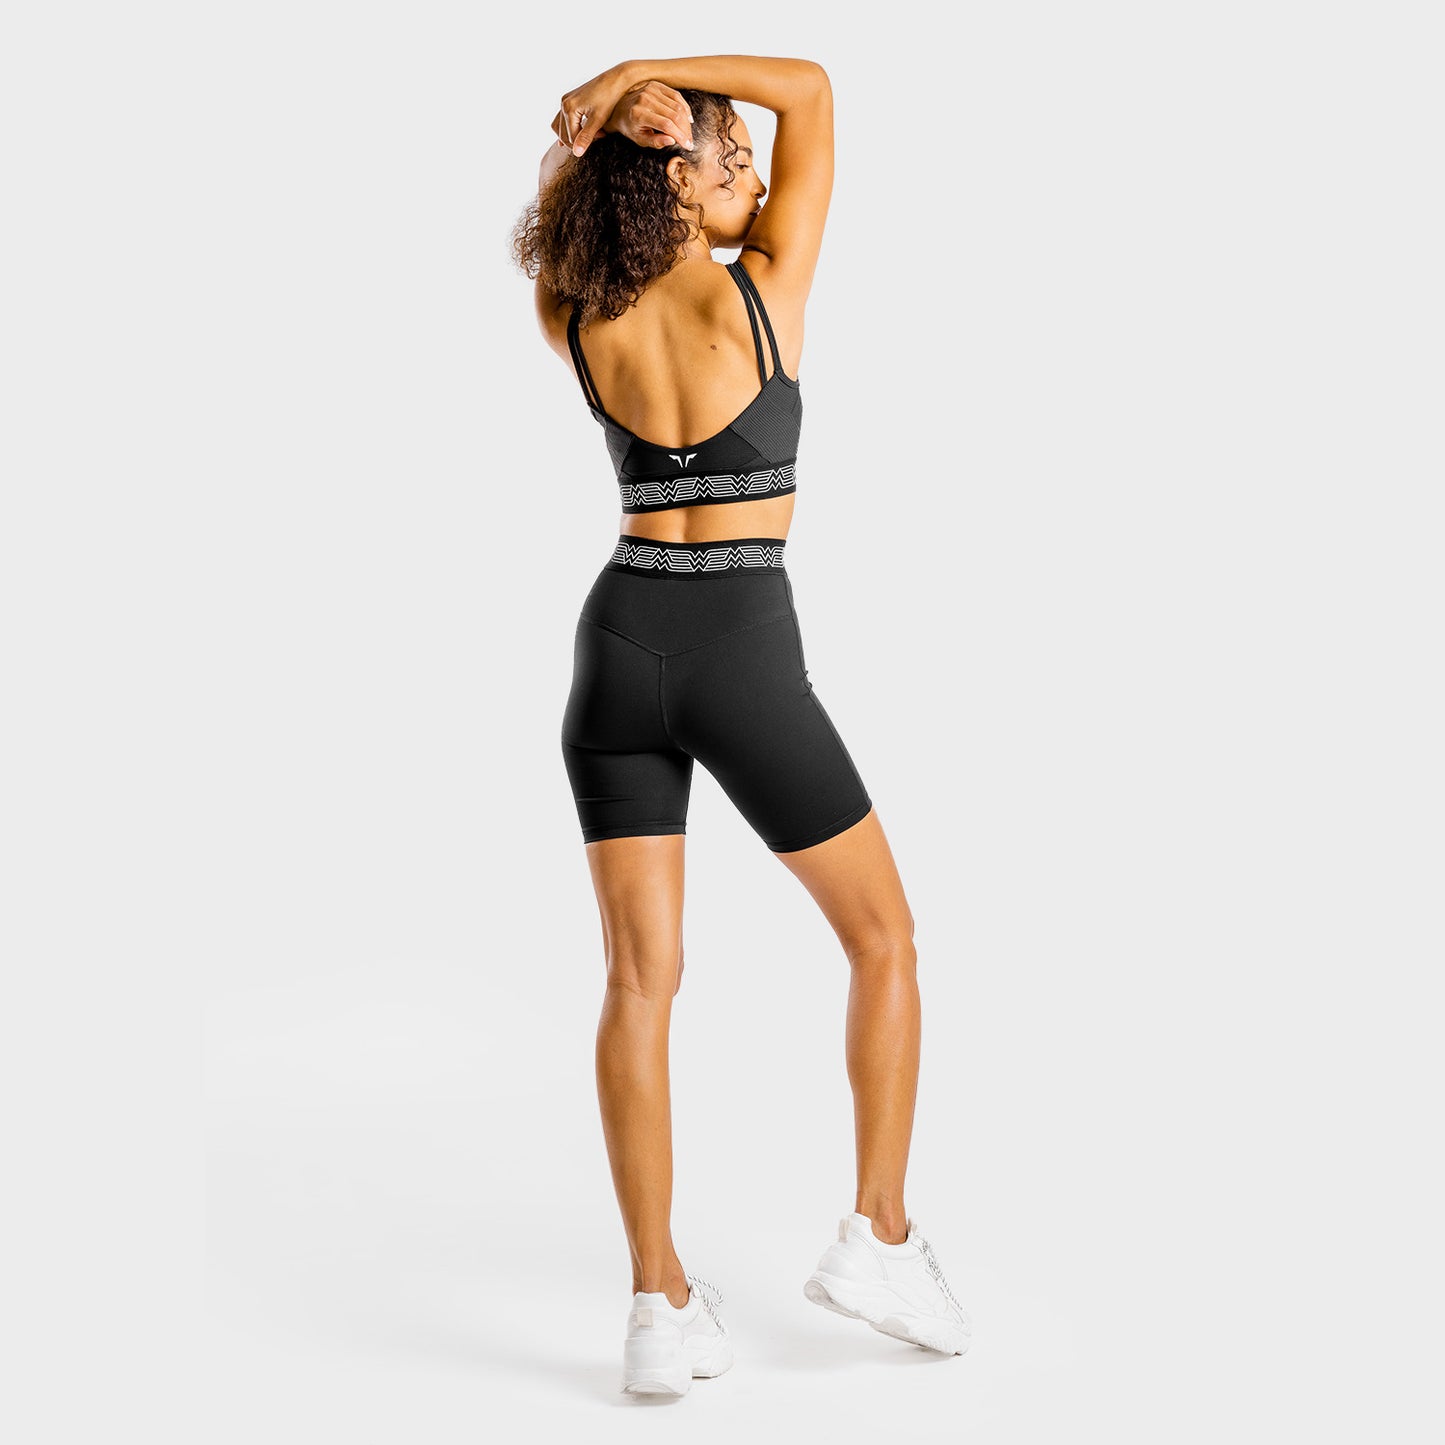 squatwolf-sports-bra-for-gym-wonder-woman-sports-bra-black-workout-clothes